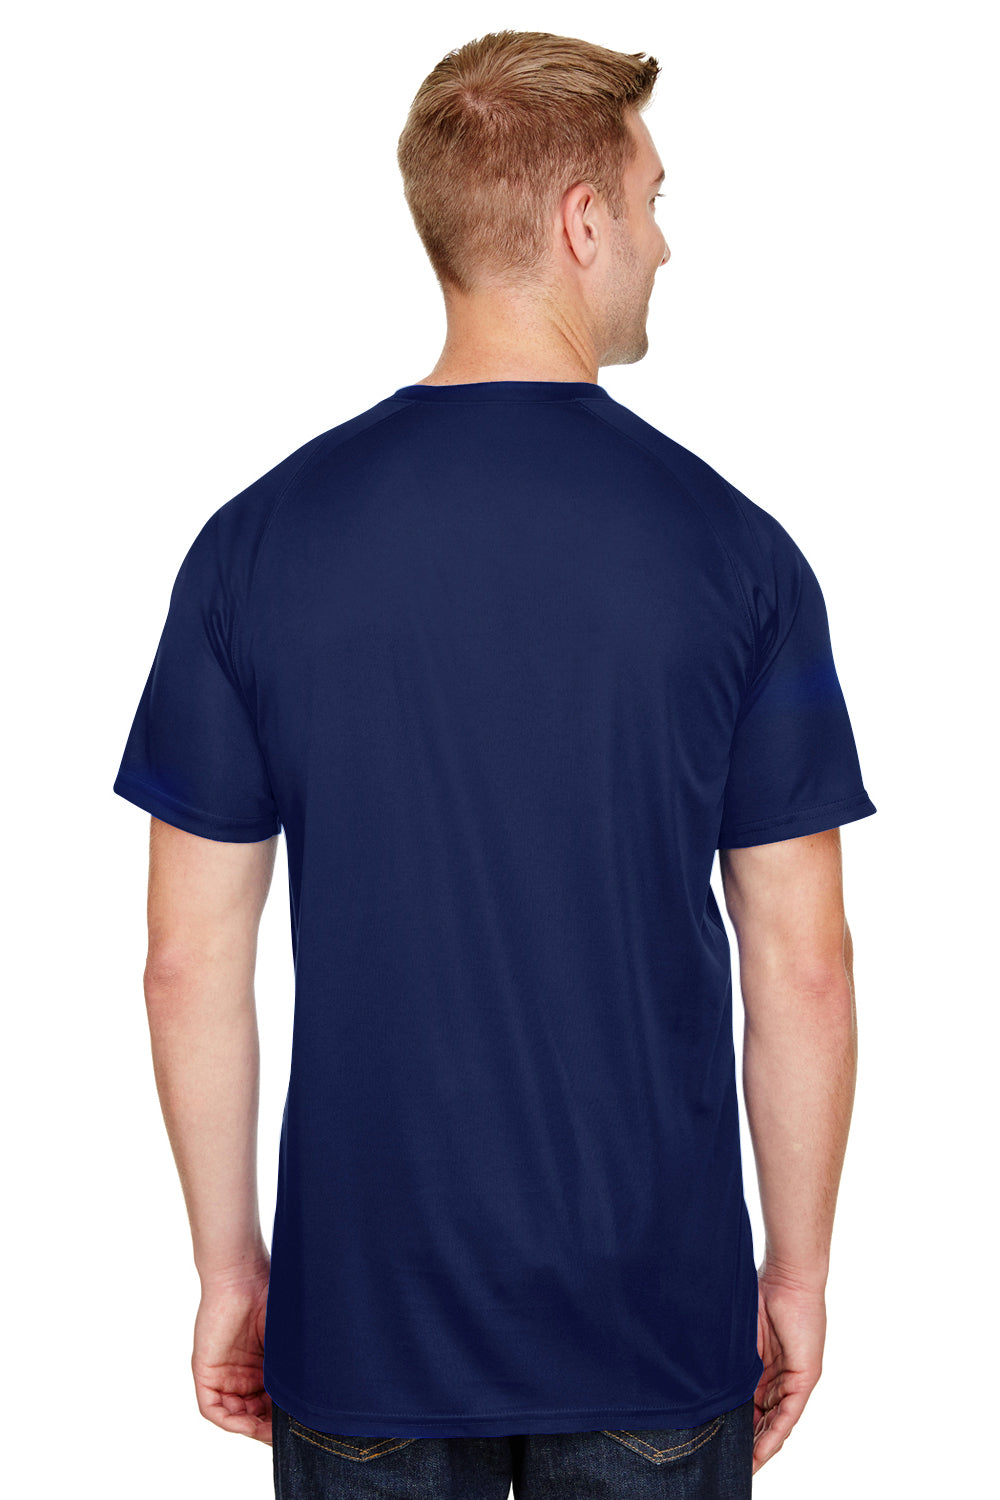 Augusta Sportswear AG1565 Mens Attain 2 Moisture Wicking Button Short Sleeve Baseball Jersey Navy Blue Model Back